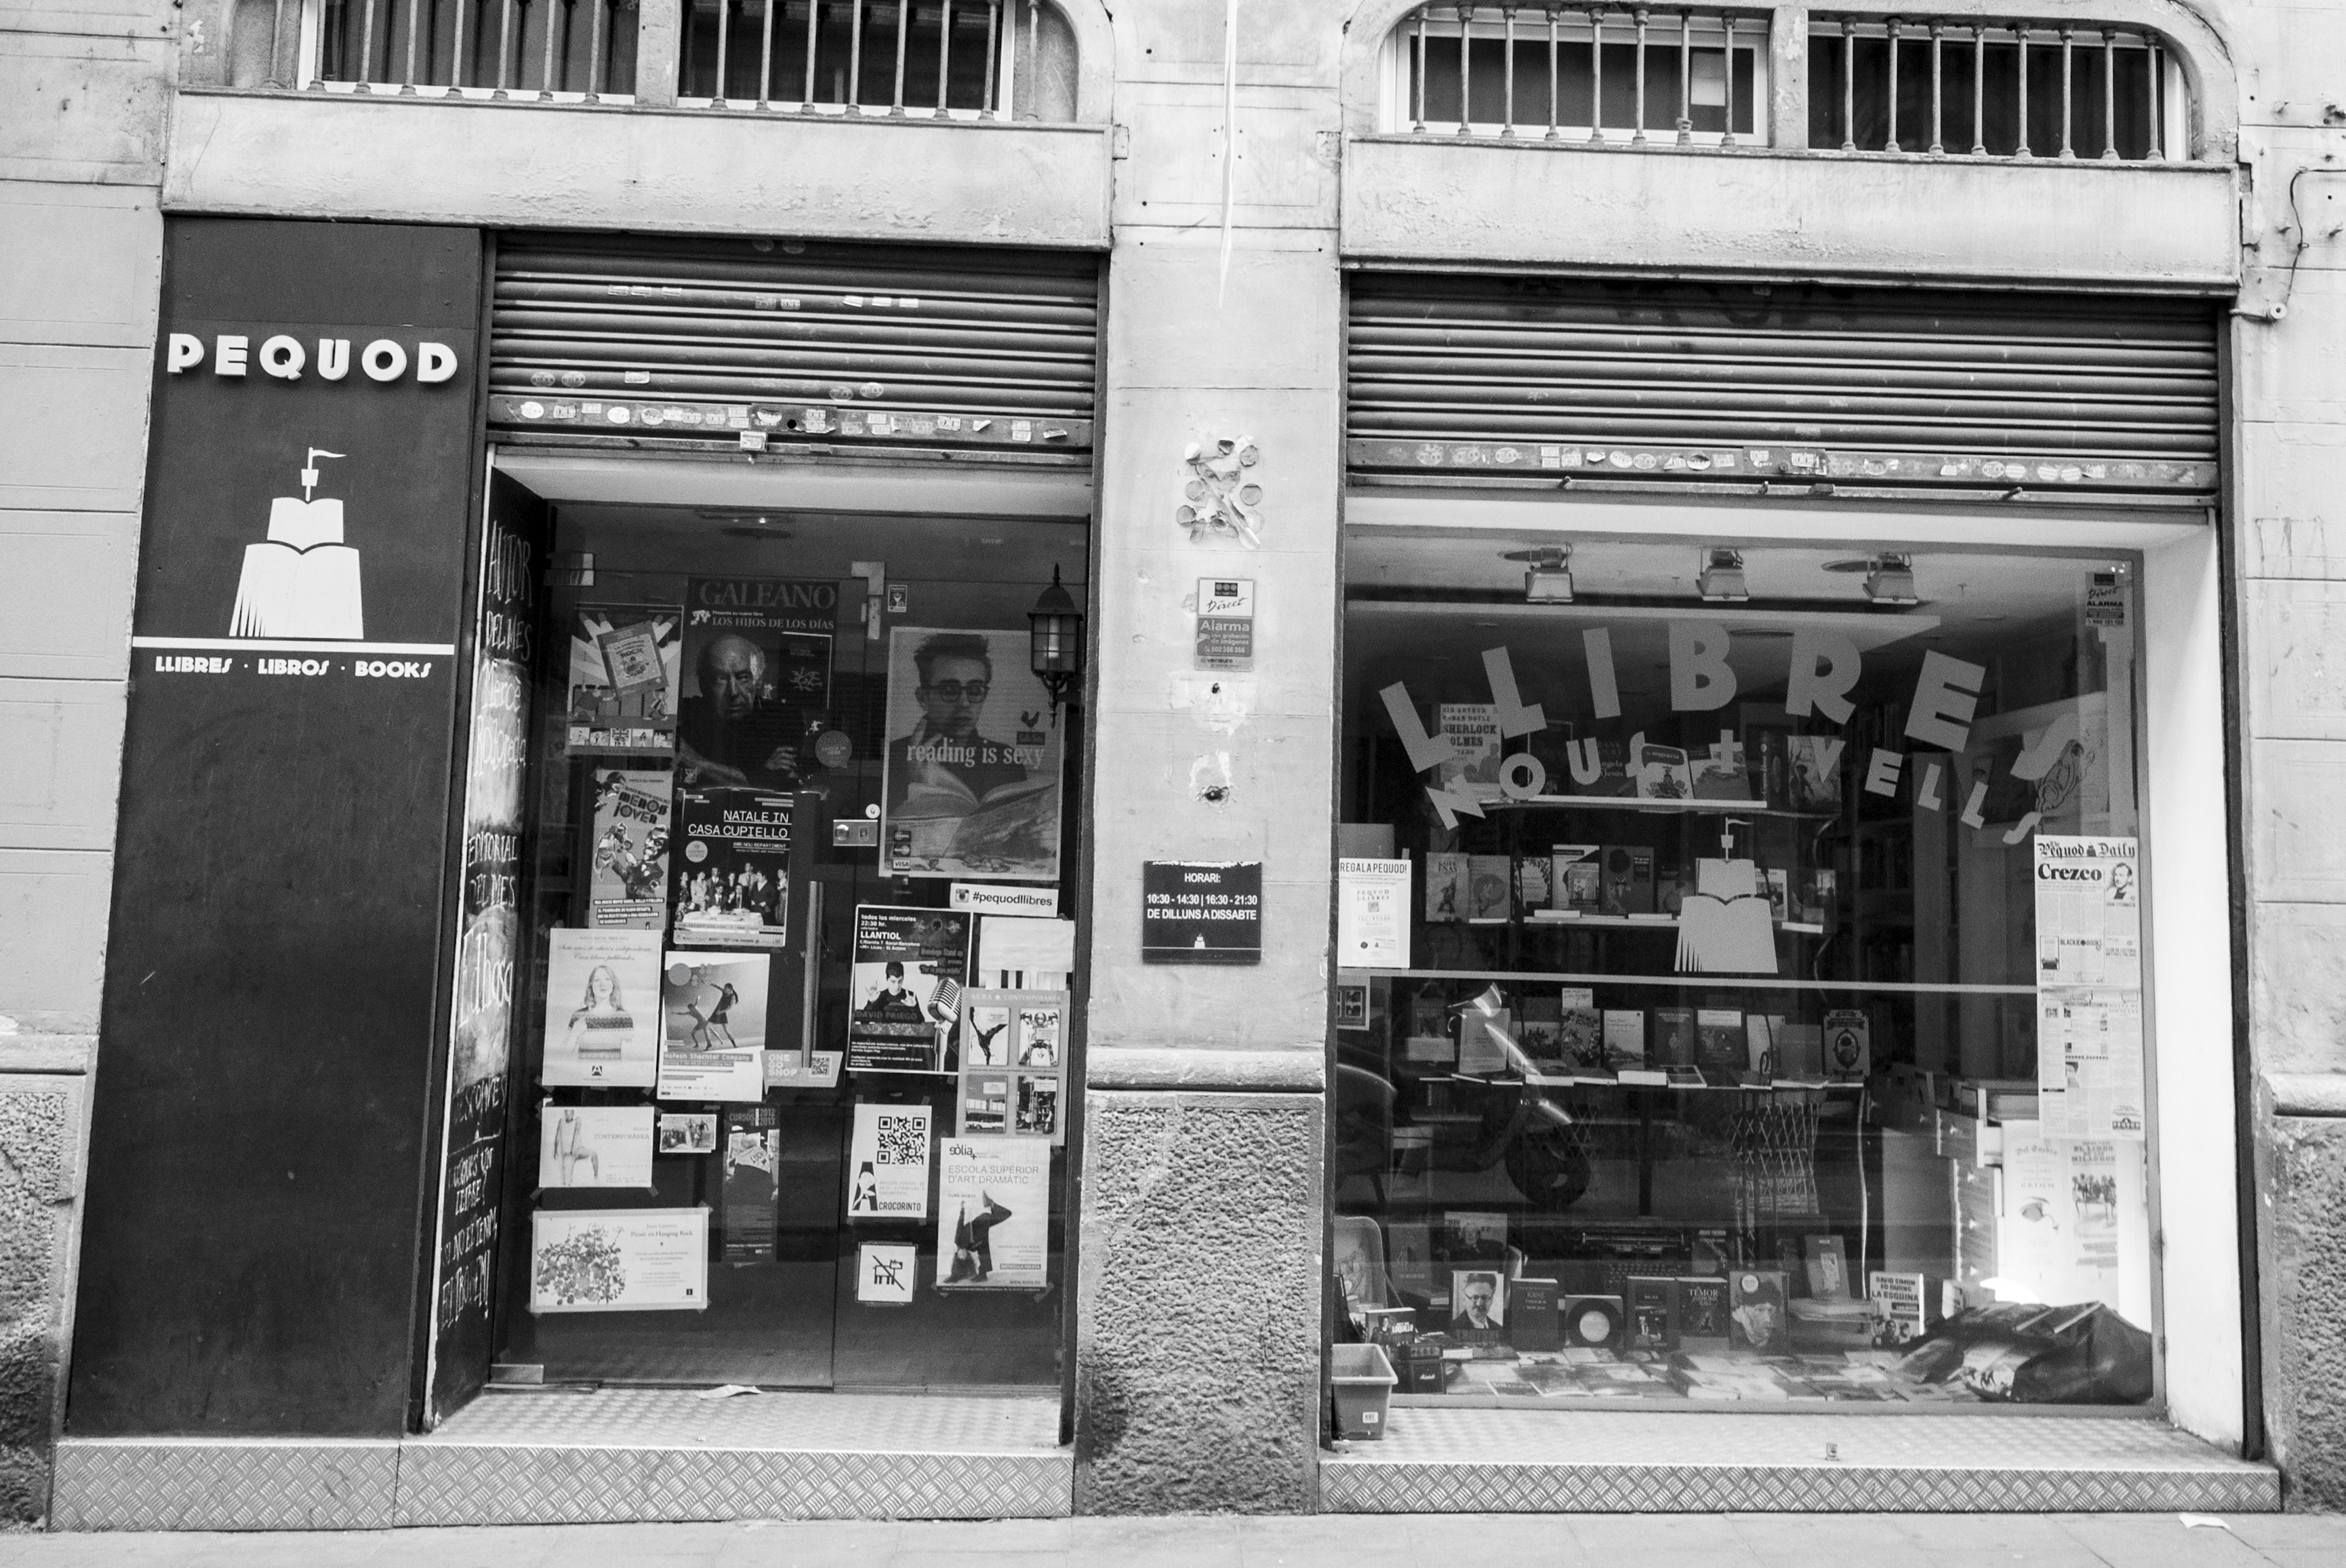 Librerías con encanto: Pequod Llibres (Barcelona)